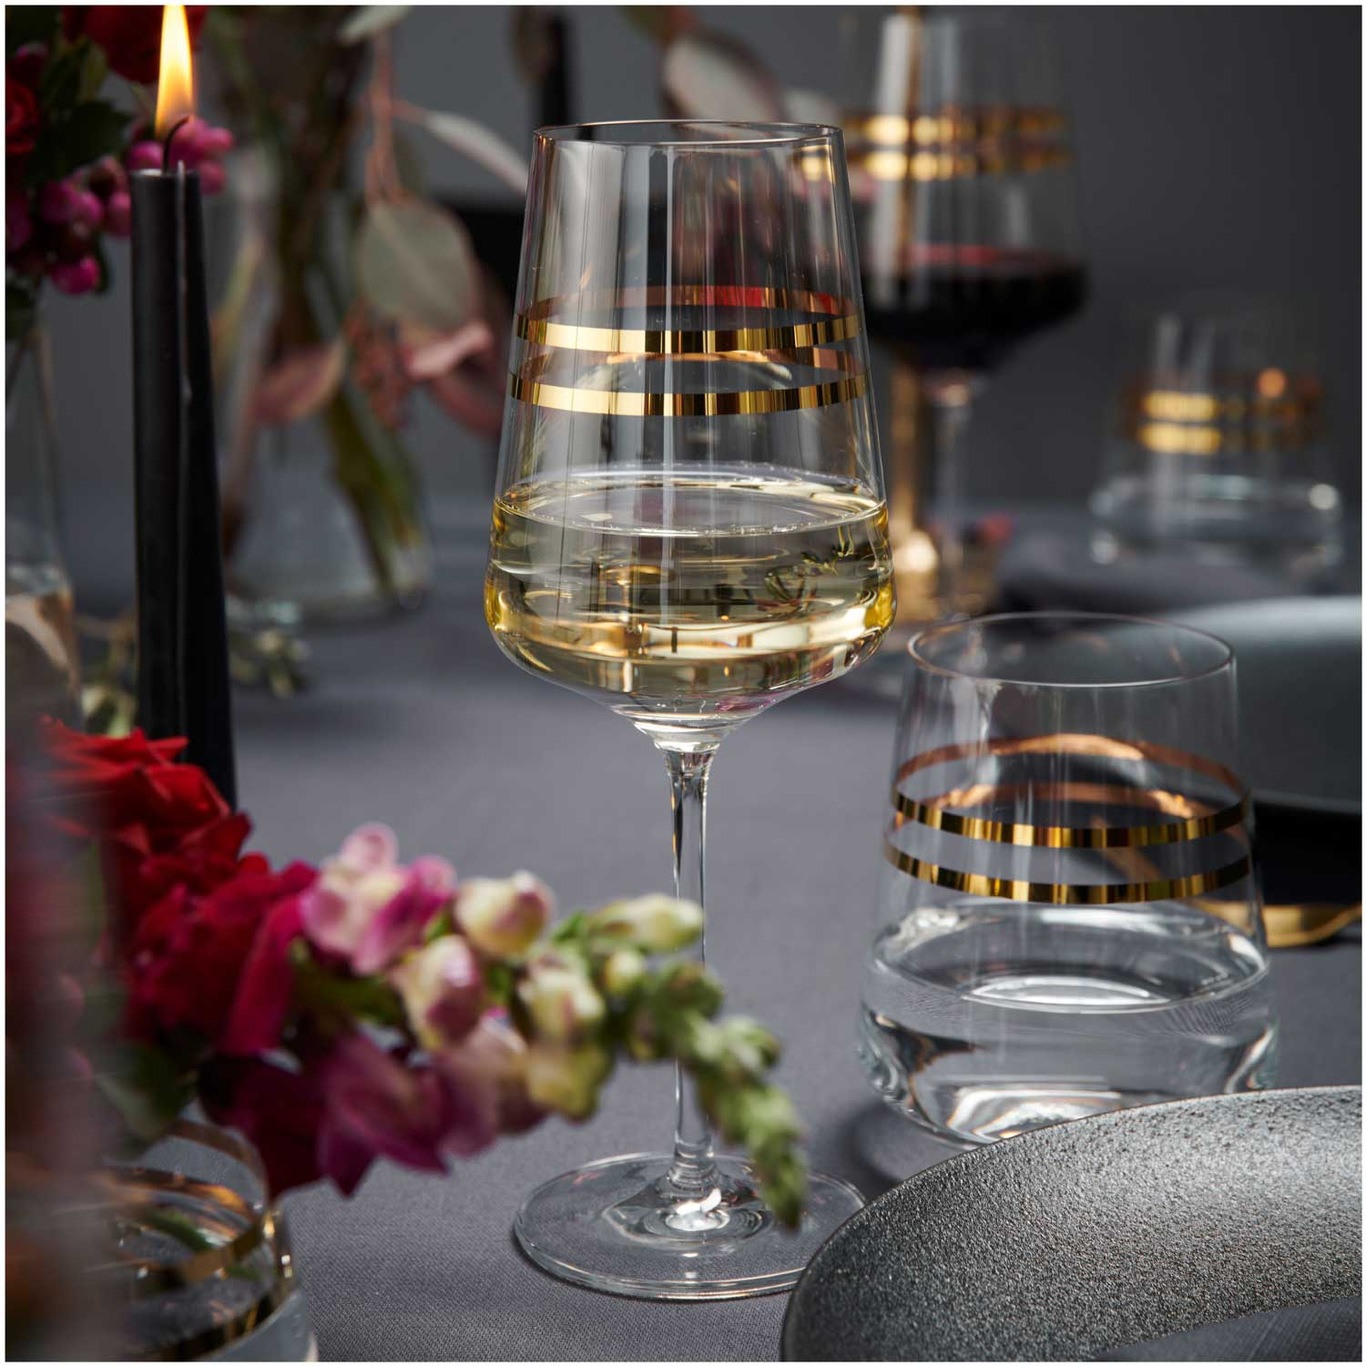 https://royaldesign.com/image/2/ritzenhoff-celebration-deluxe-white-wine-glass-stripes-2-pack-40-cl-8?w=800&quality=80